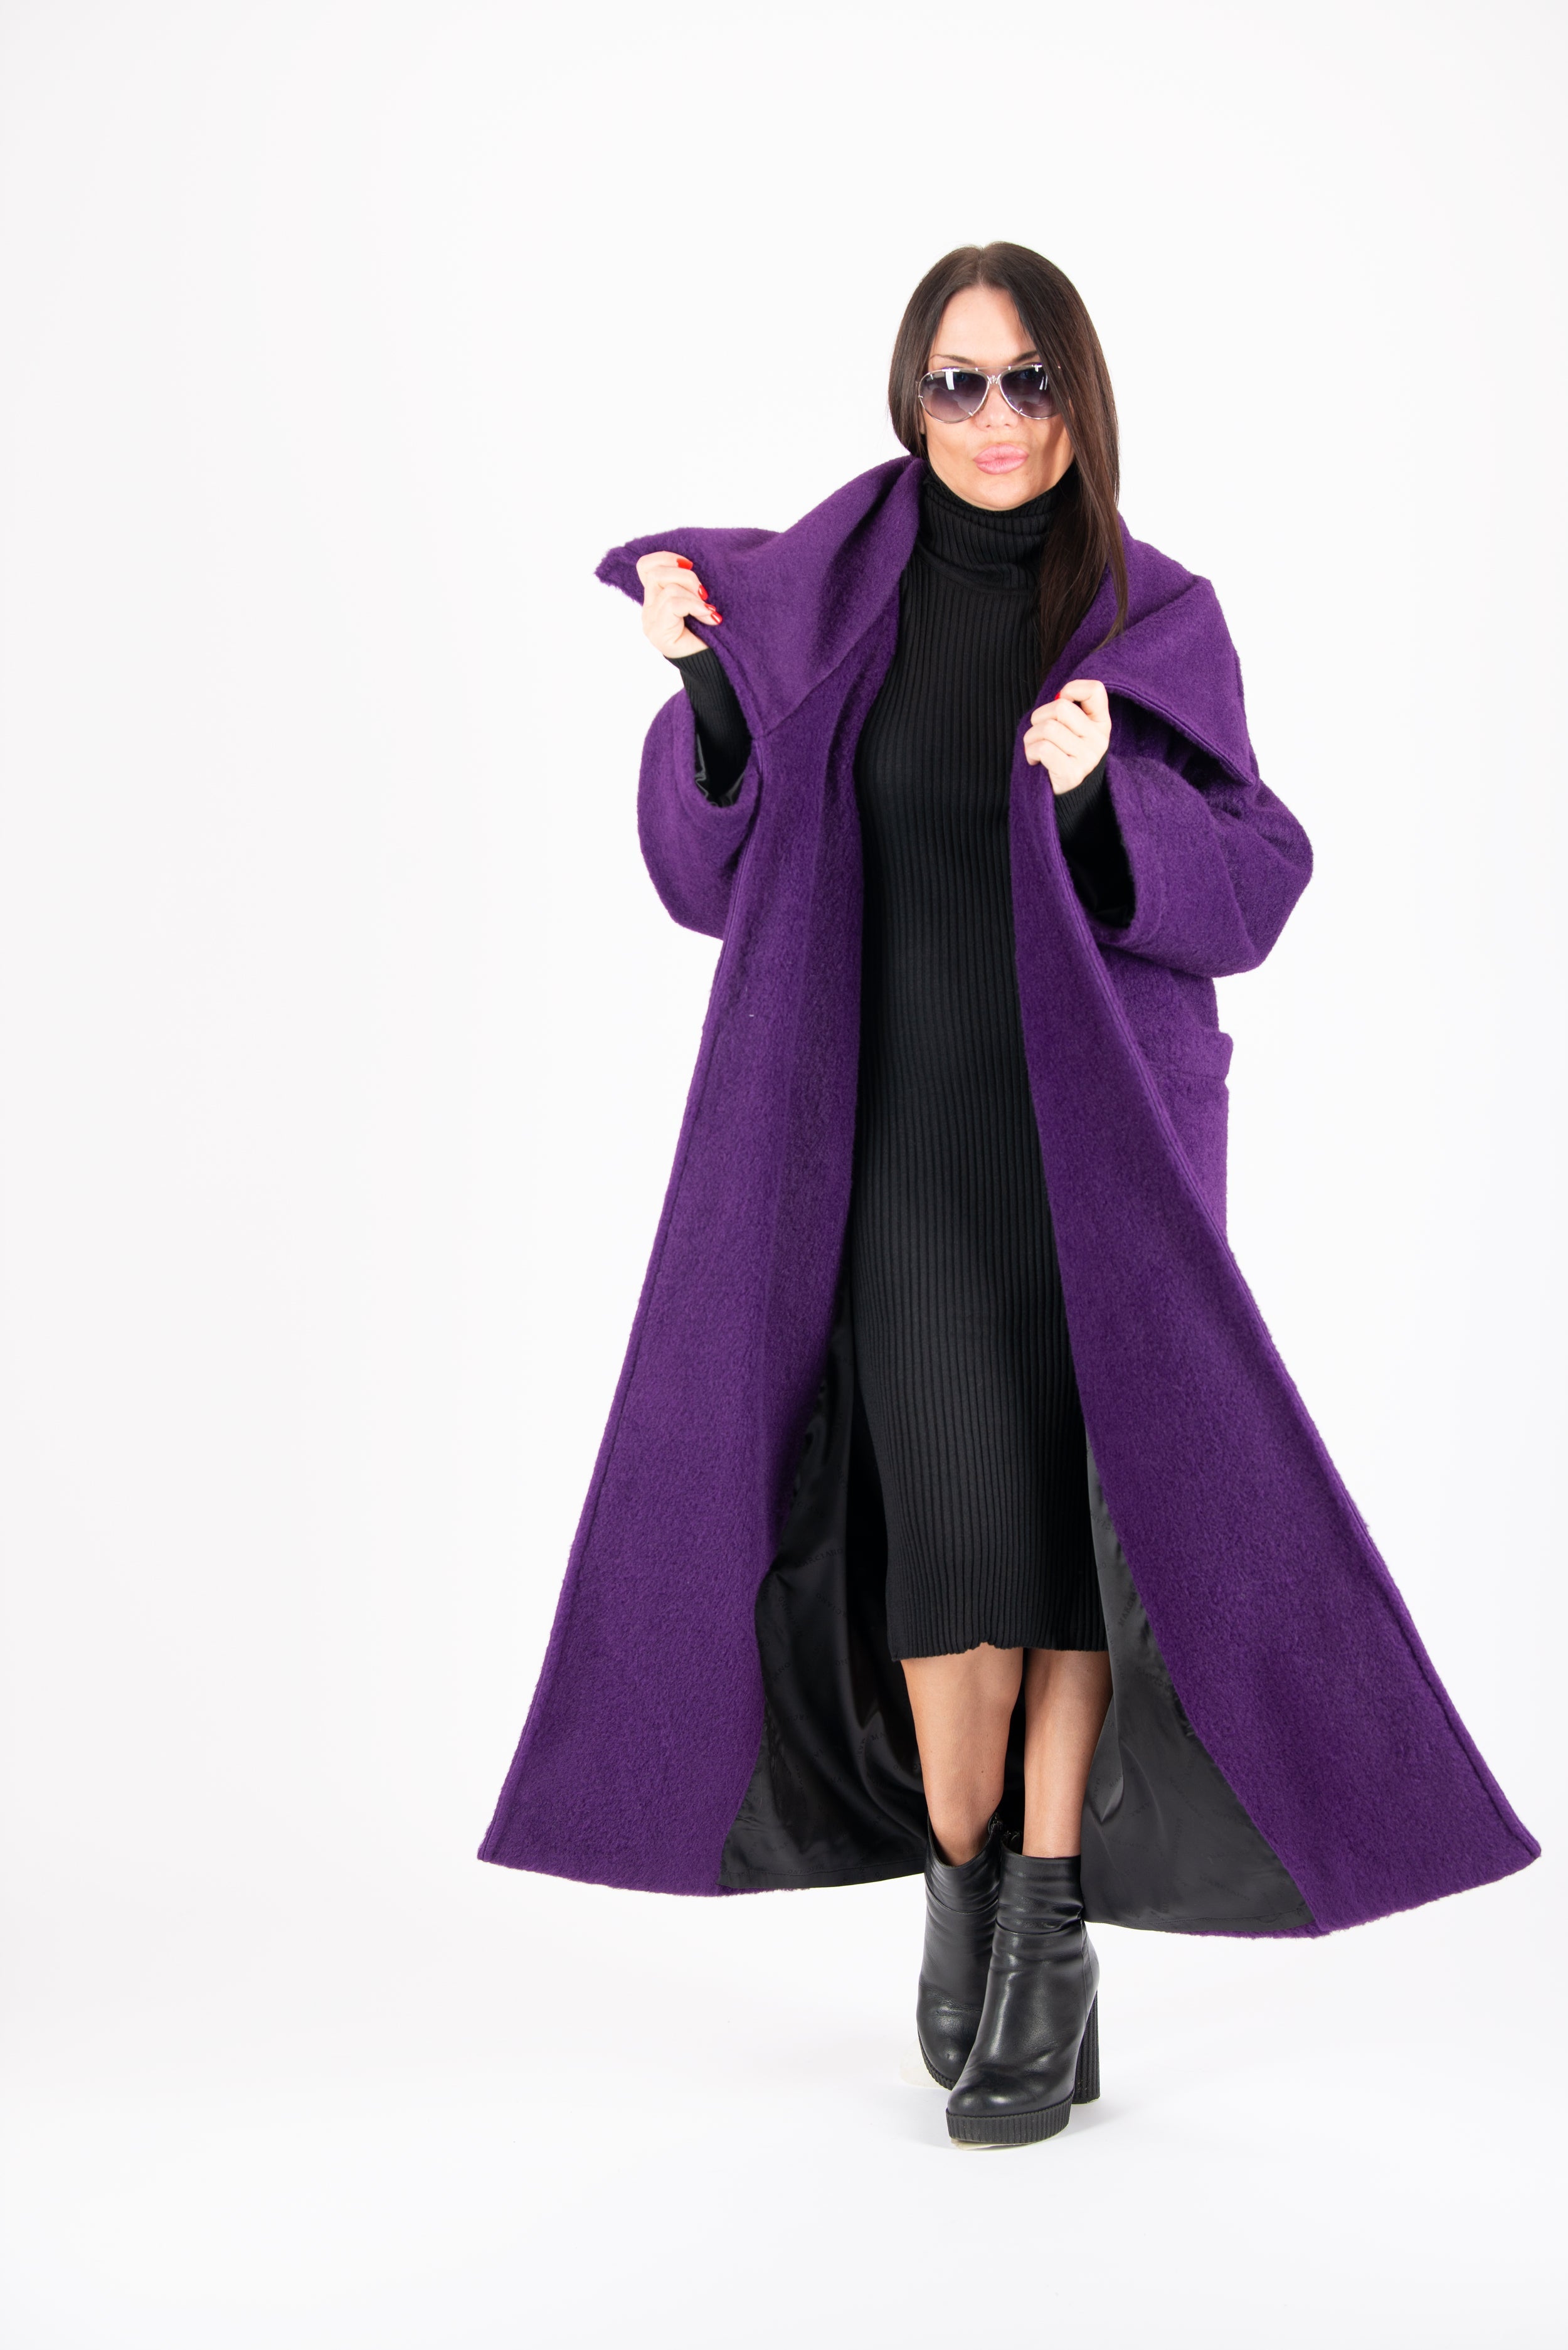 Elegant Winter Fur Purple Coat by EUG Fashion